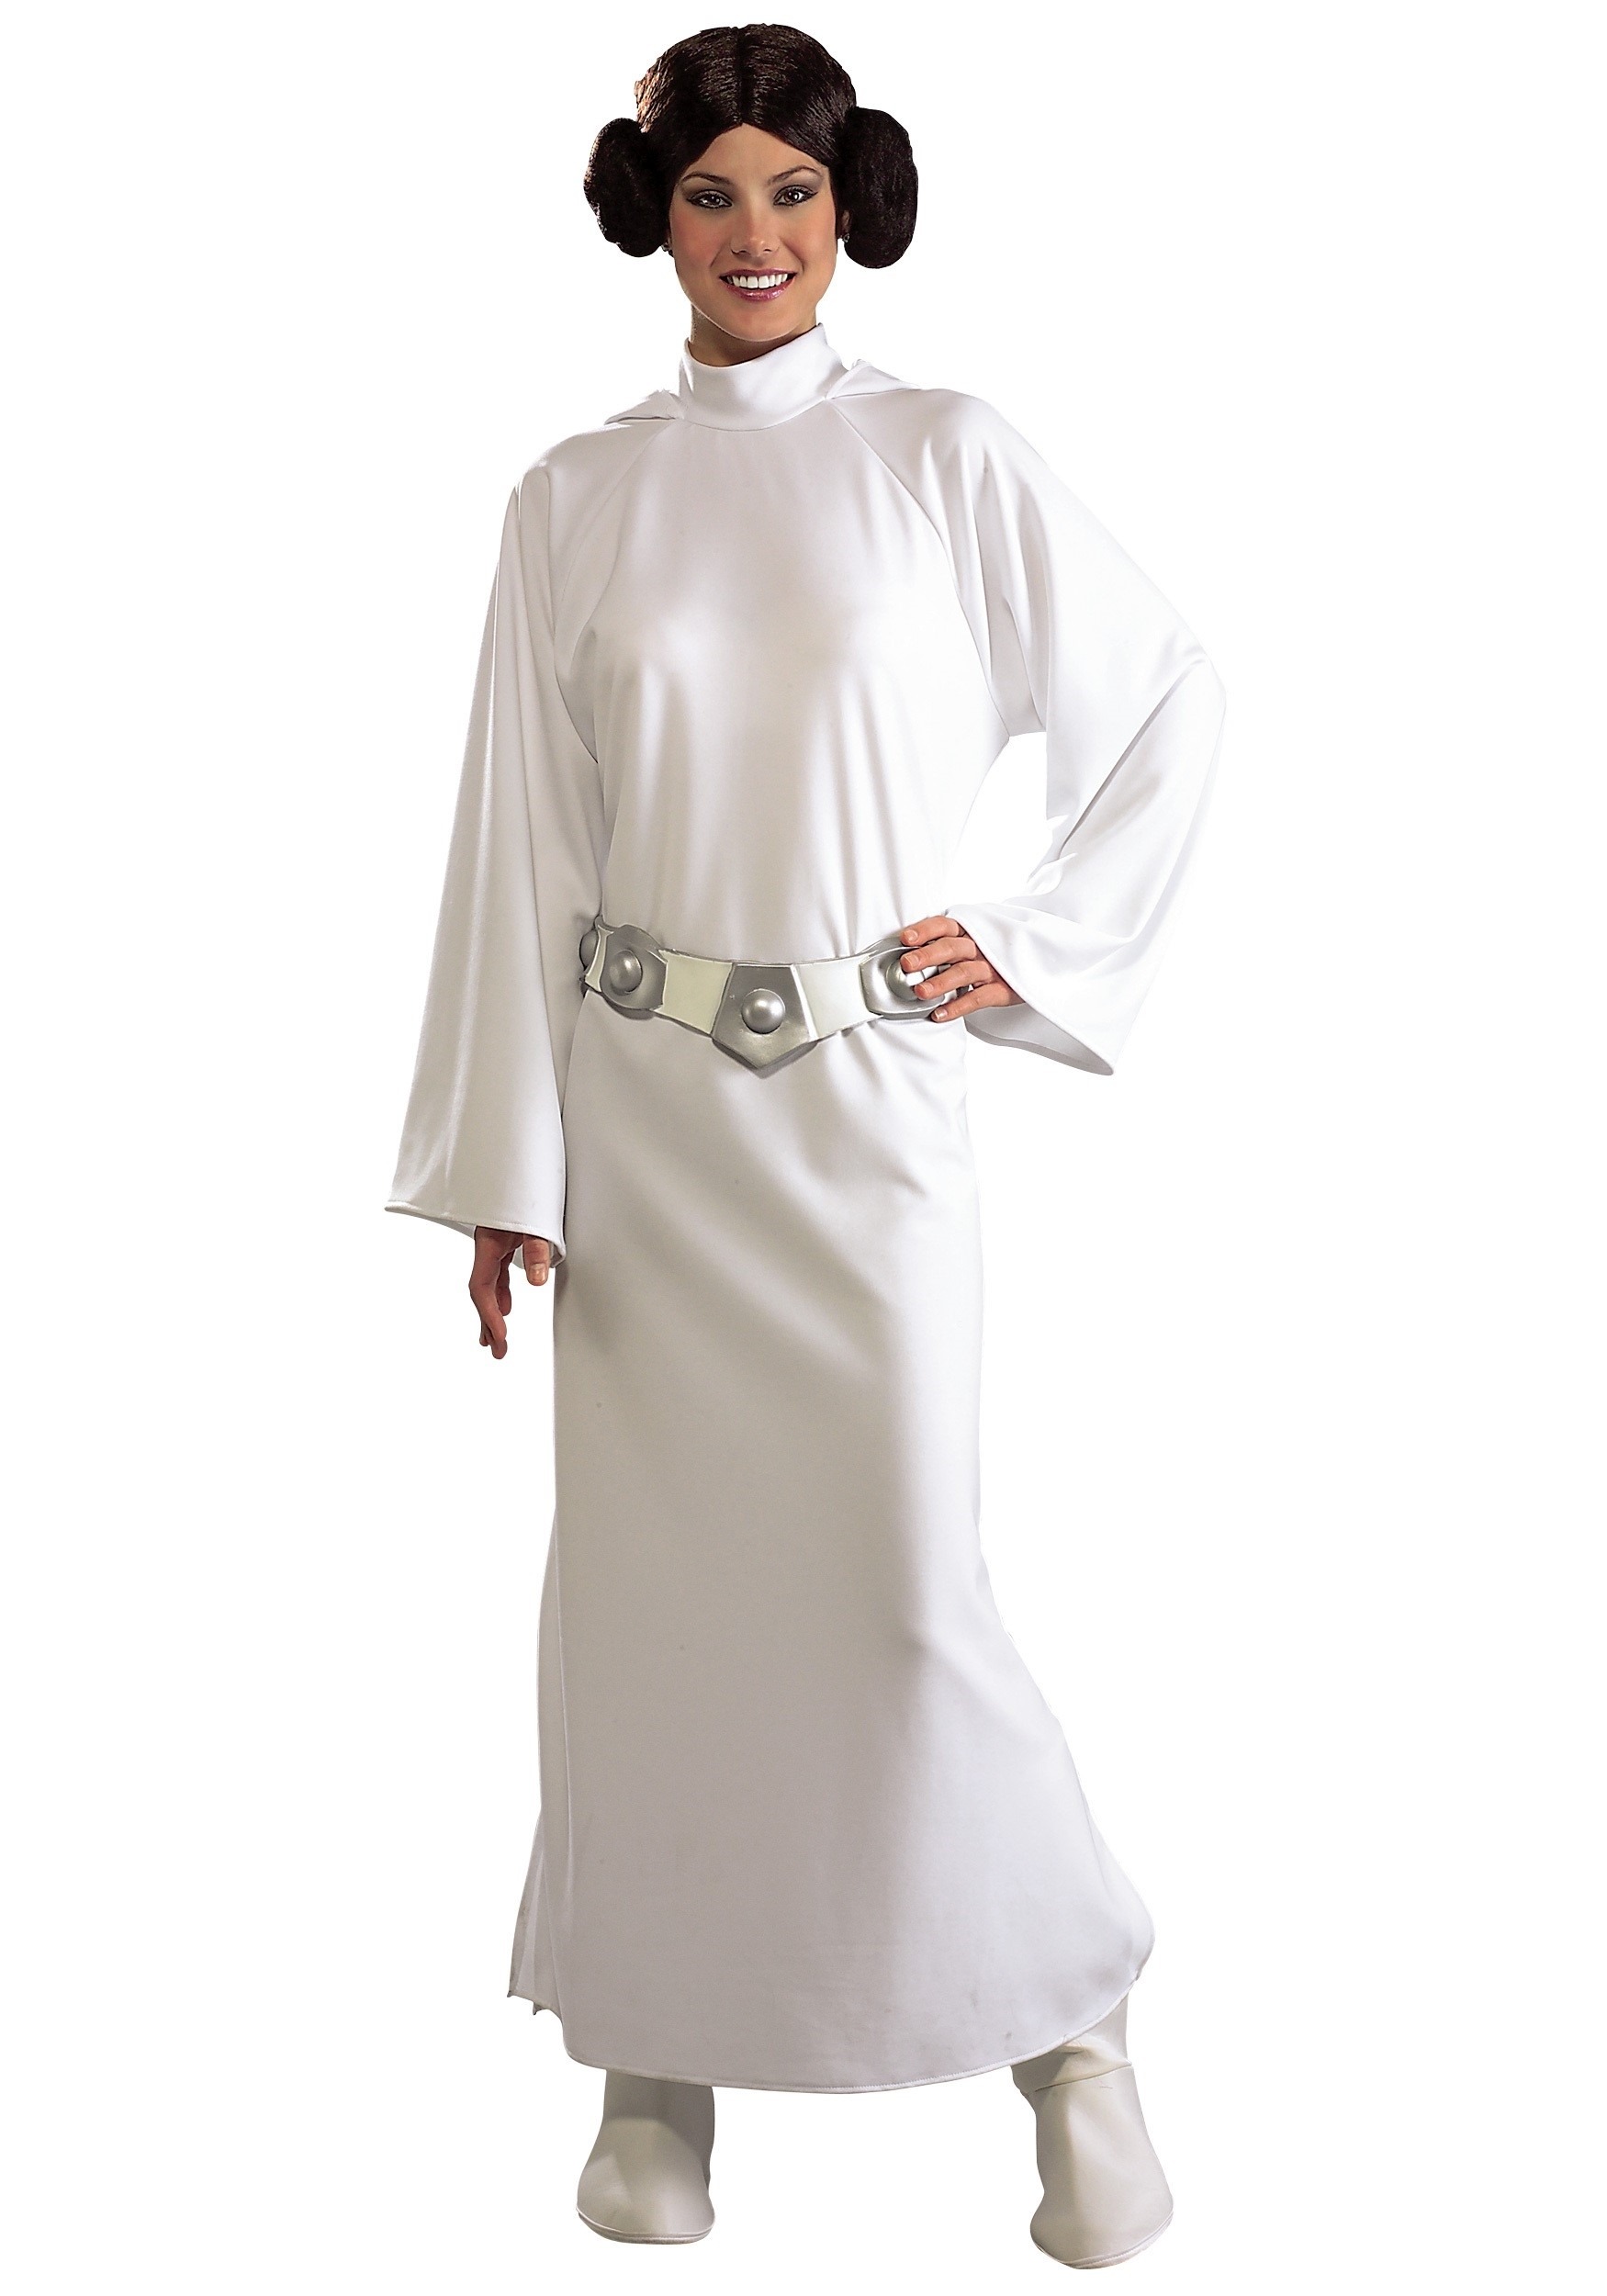 Women's Leia Costume